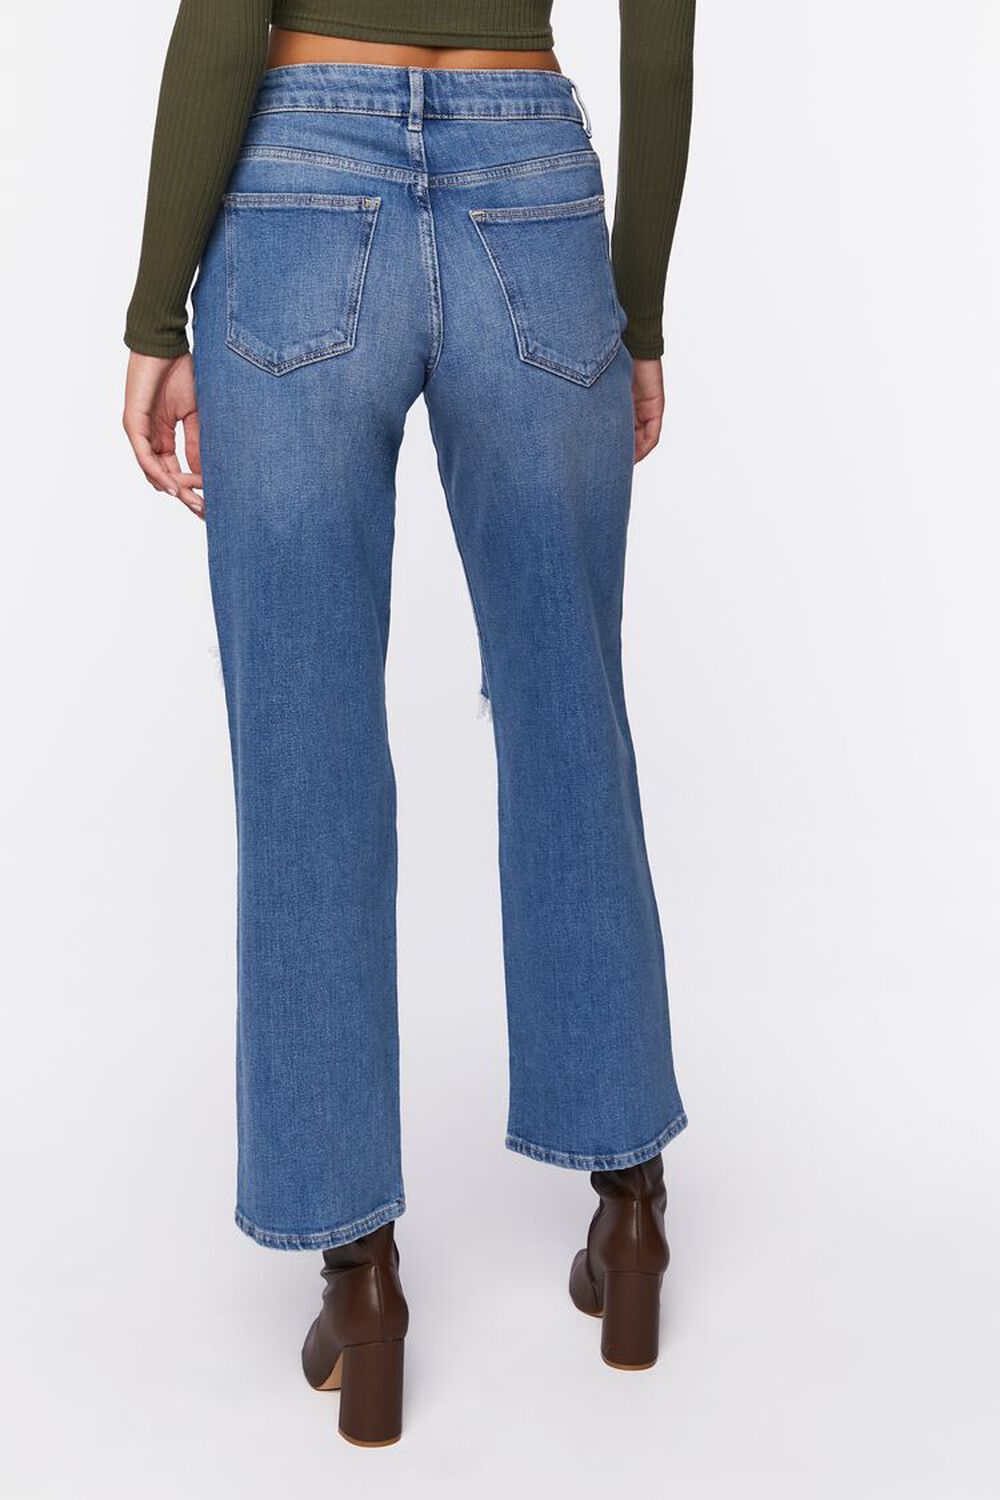 MEDIUM DENIM Hemp 10% 90s-Fit Jeans, image 3